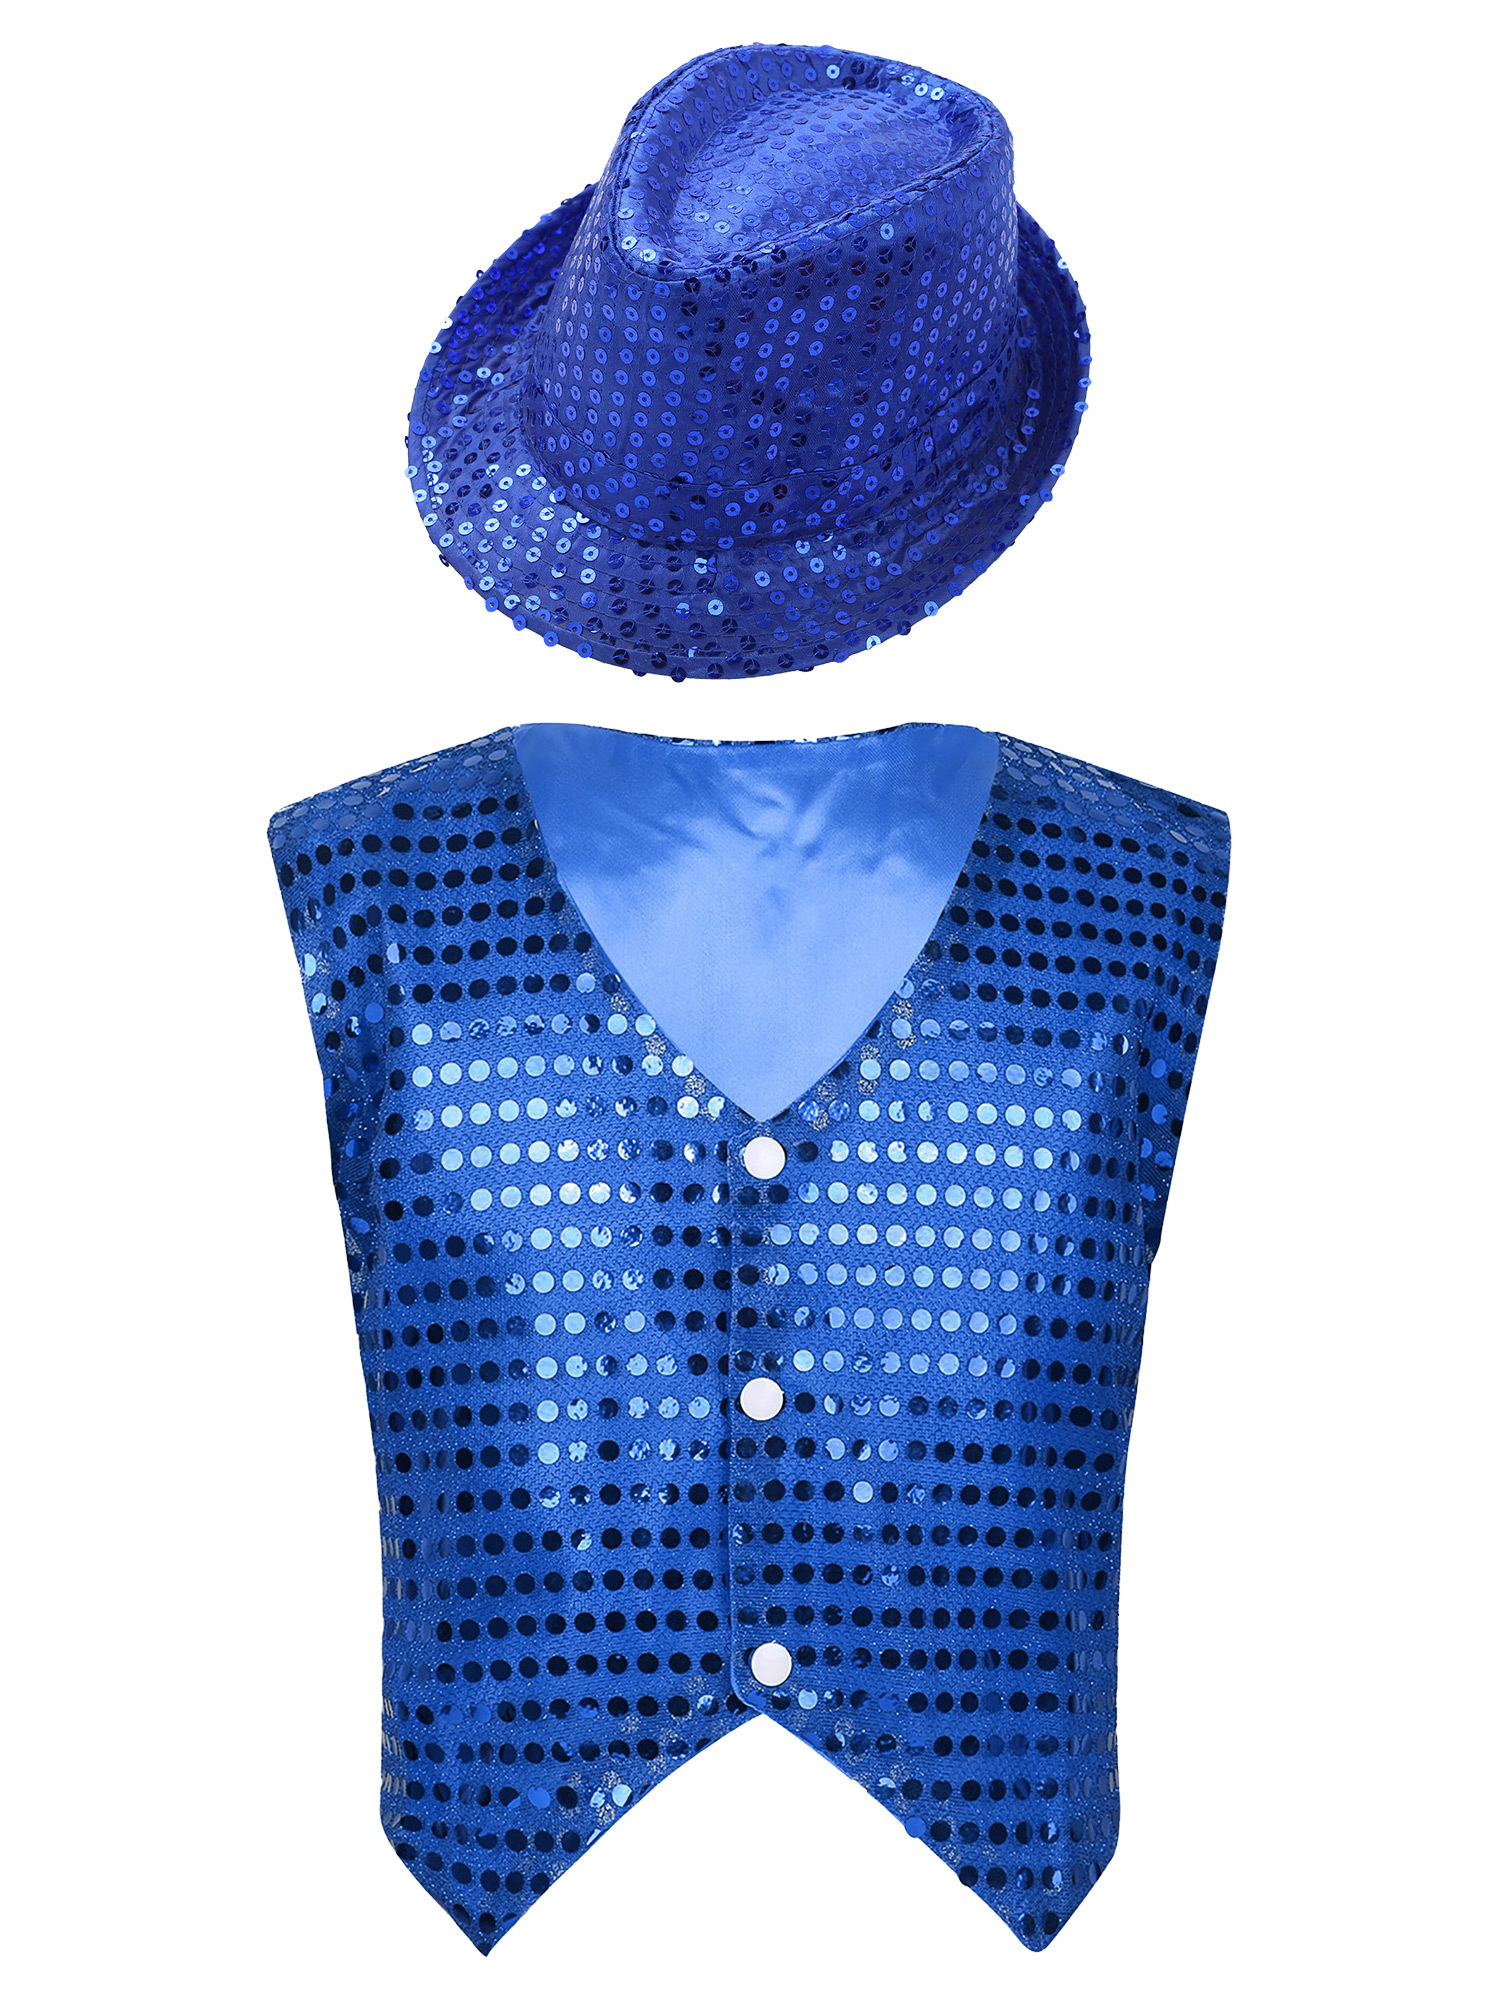 IEFIEL Kids Boys Sparkle Sequins Button Down Vest with Hat Dance Outfit Set Hip Hop Jazz Stage Performance Costume Blue 7-8 - image 1 of 7